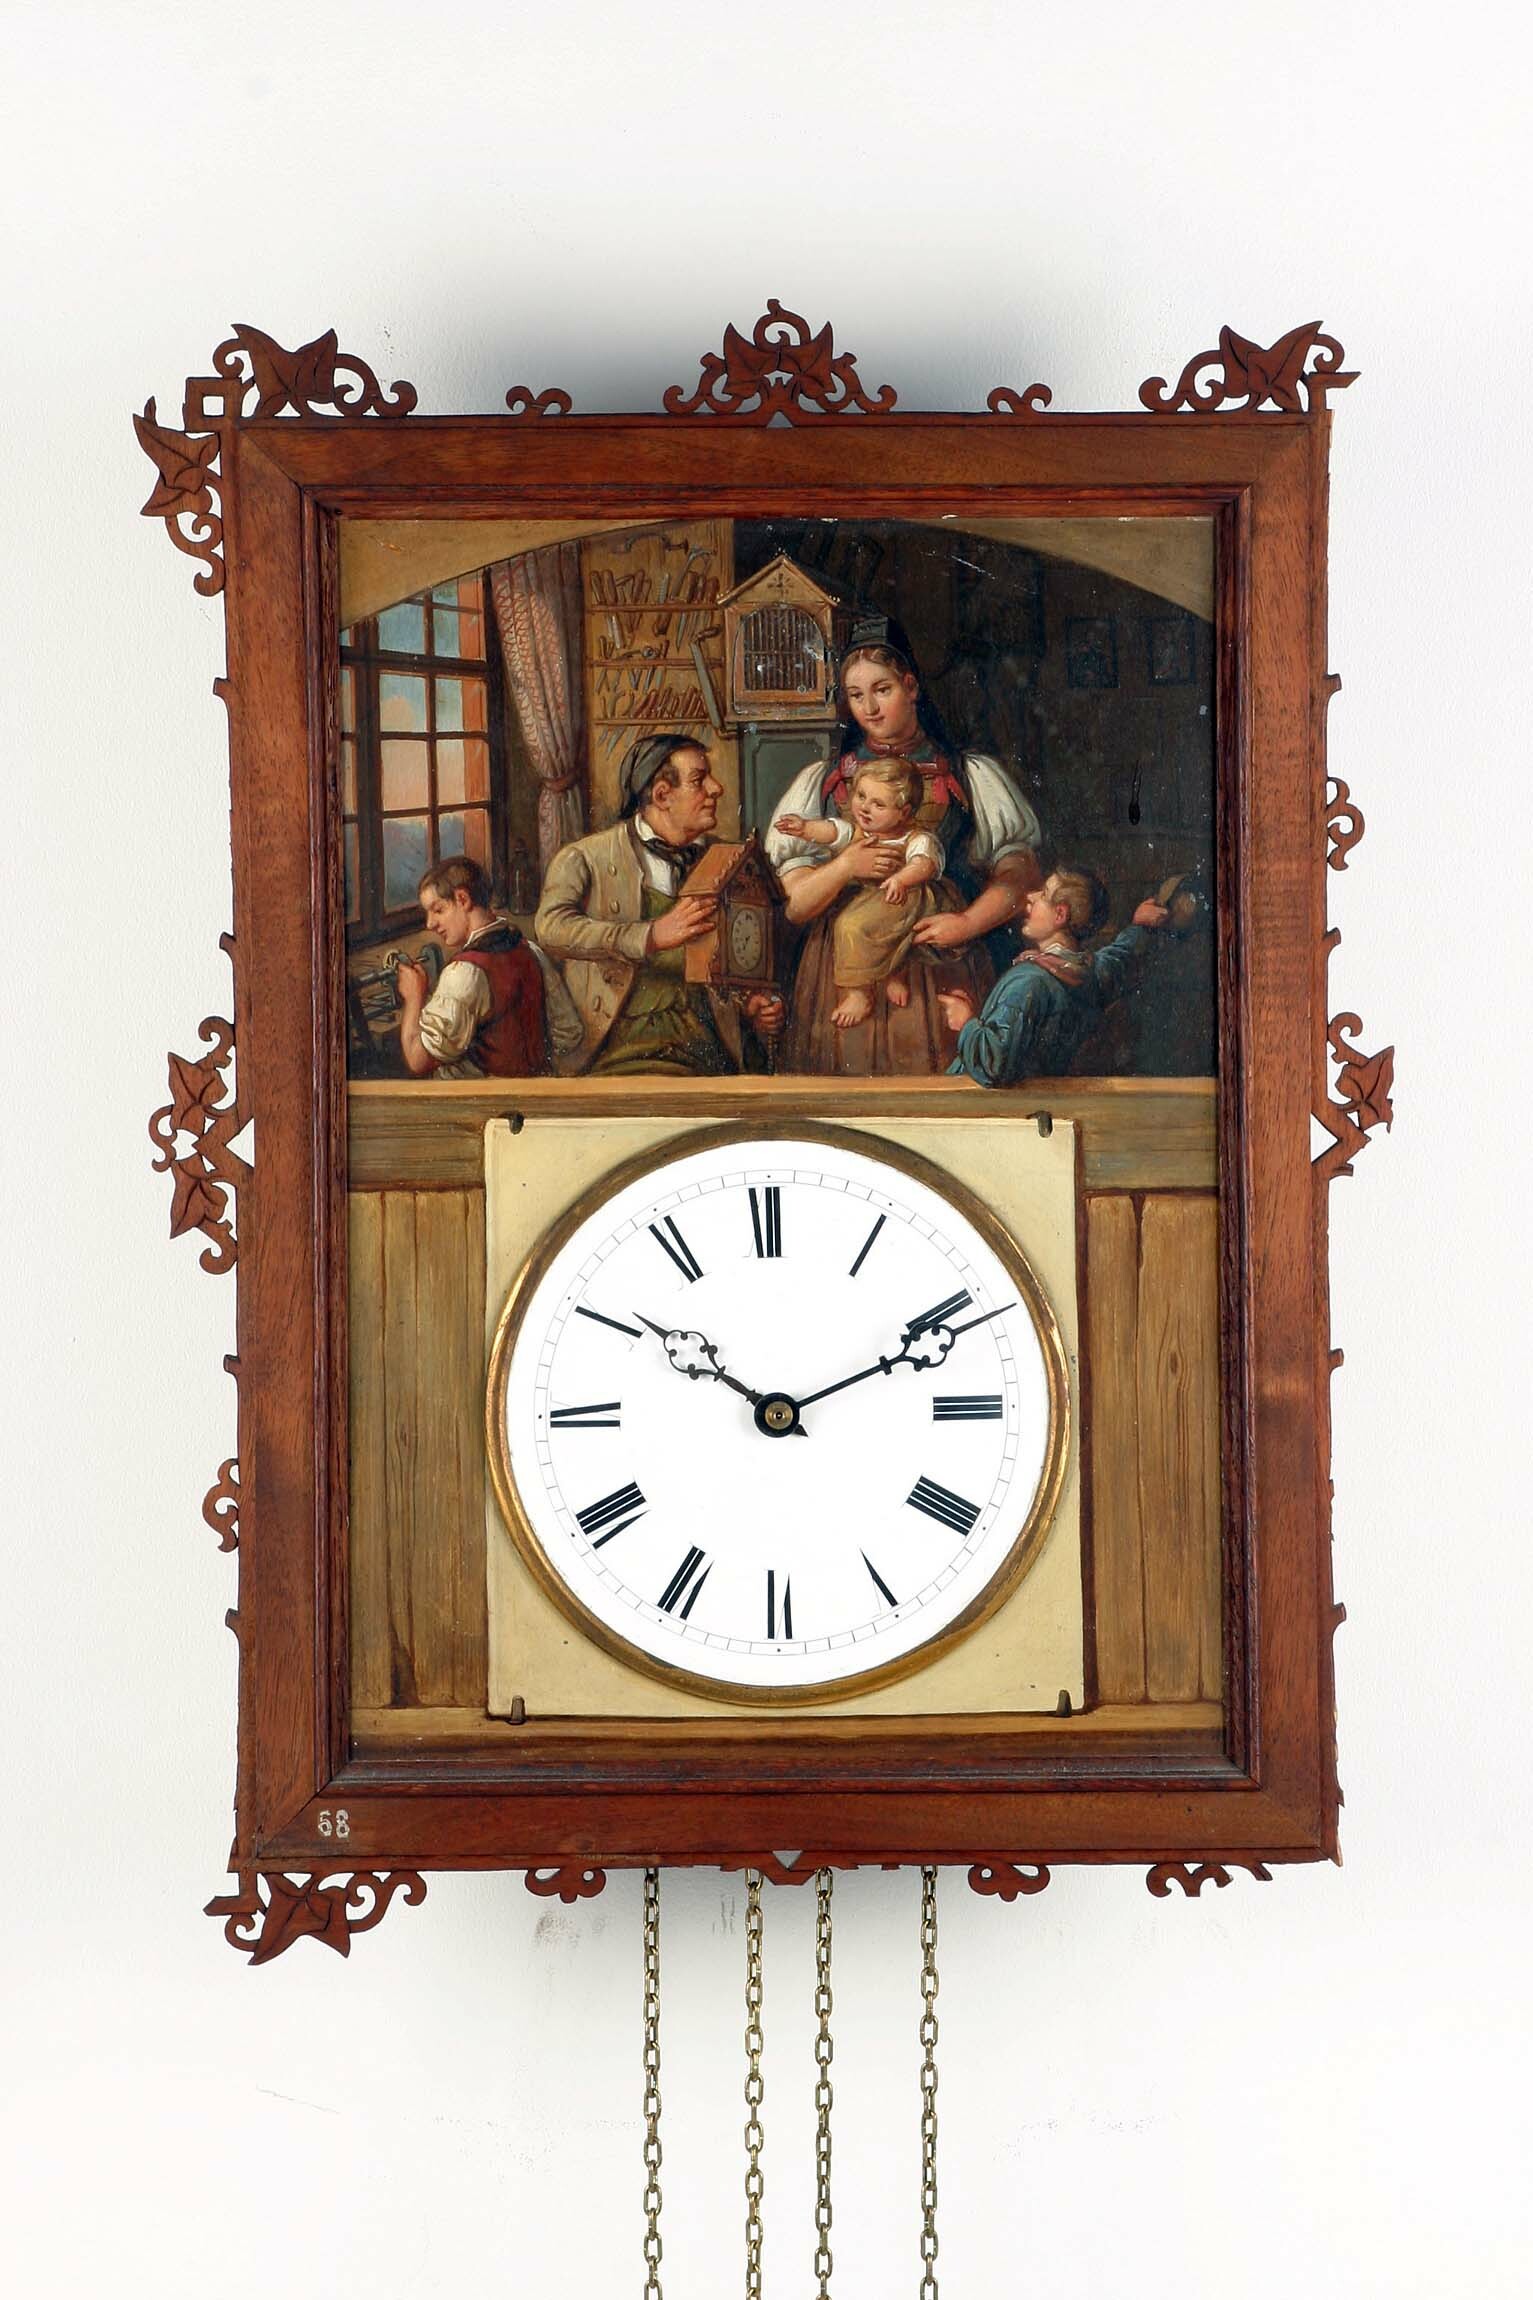 Rahmenuhr, Uhrmacherschule Furtwangen, wohl Johann Baptist Laule, Furtwangen, 1860 (Deutsches Uhrenmuseum CC BY-SA)